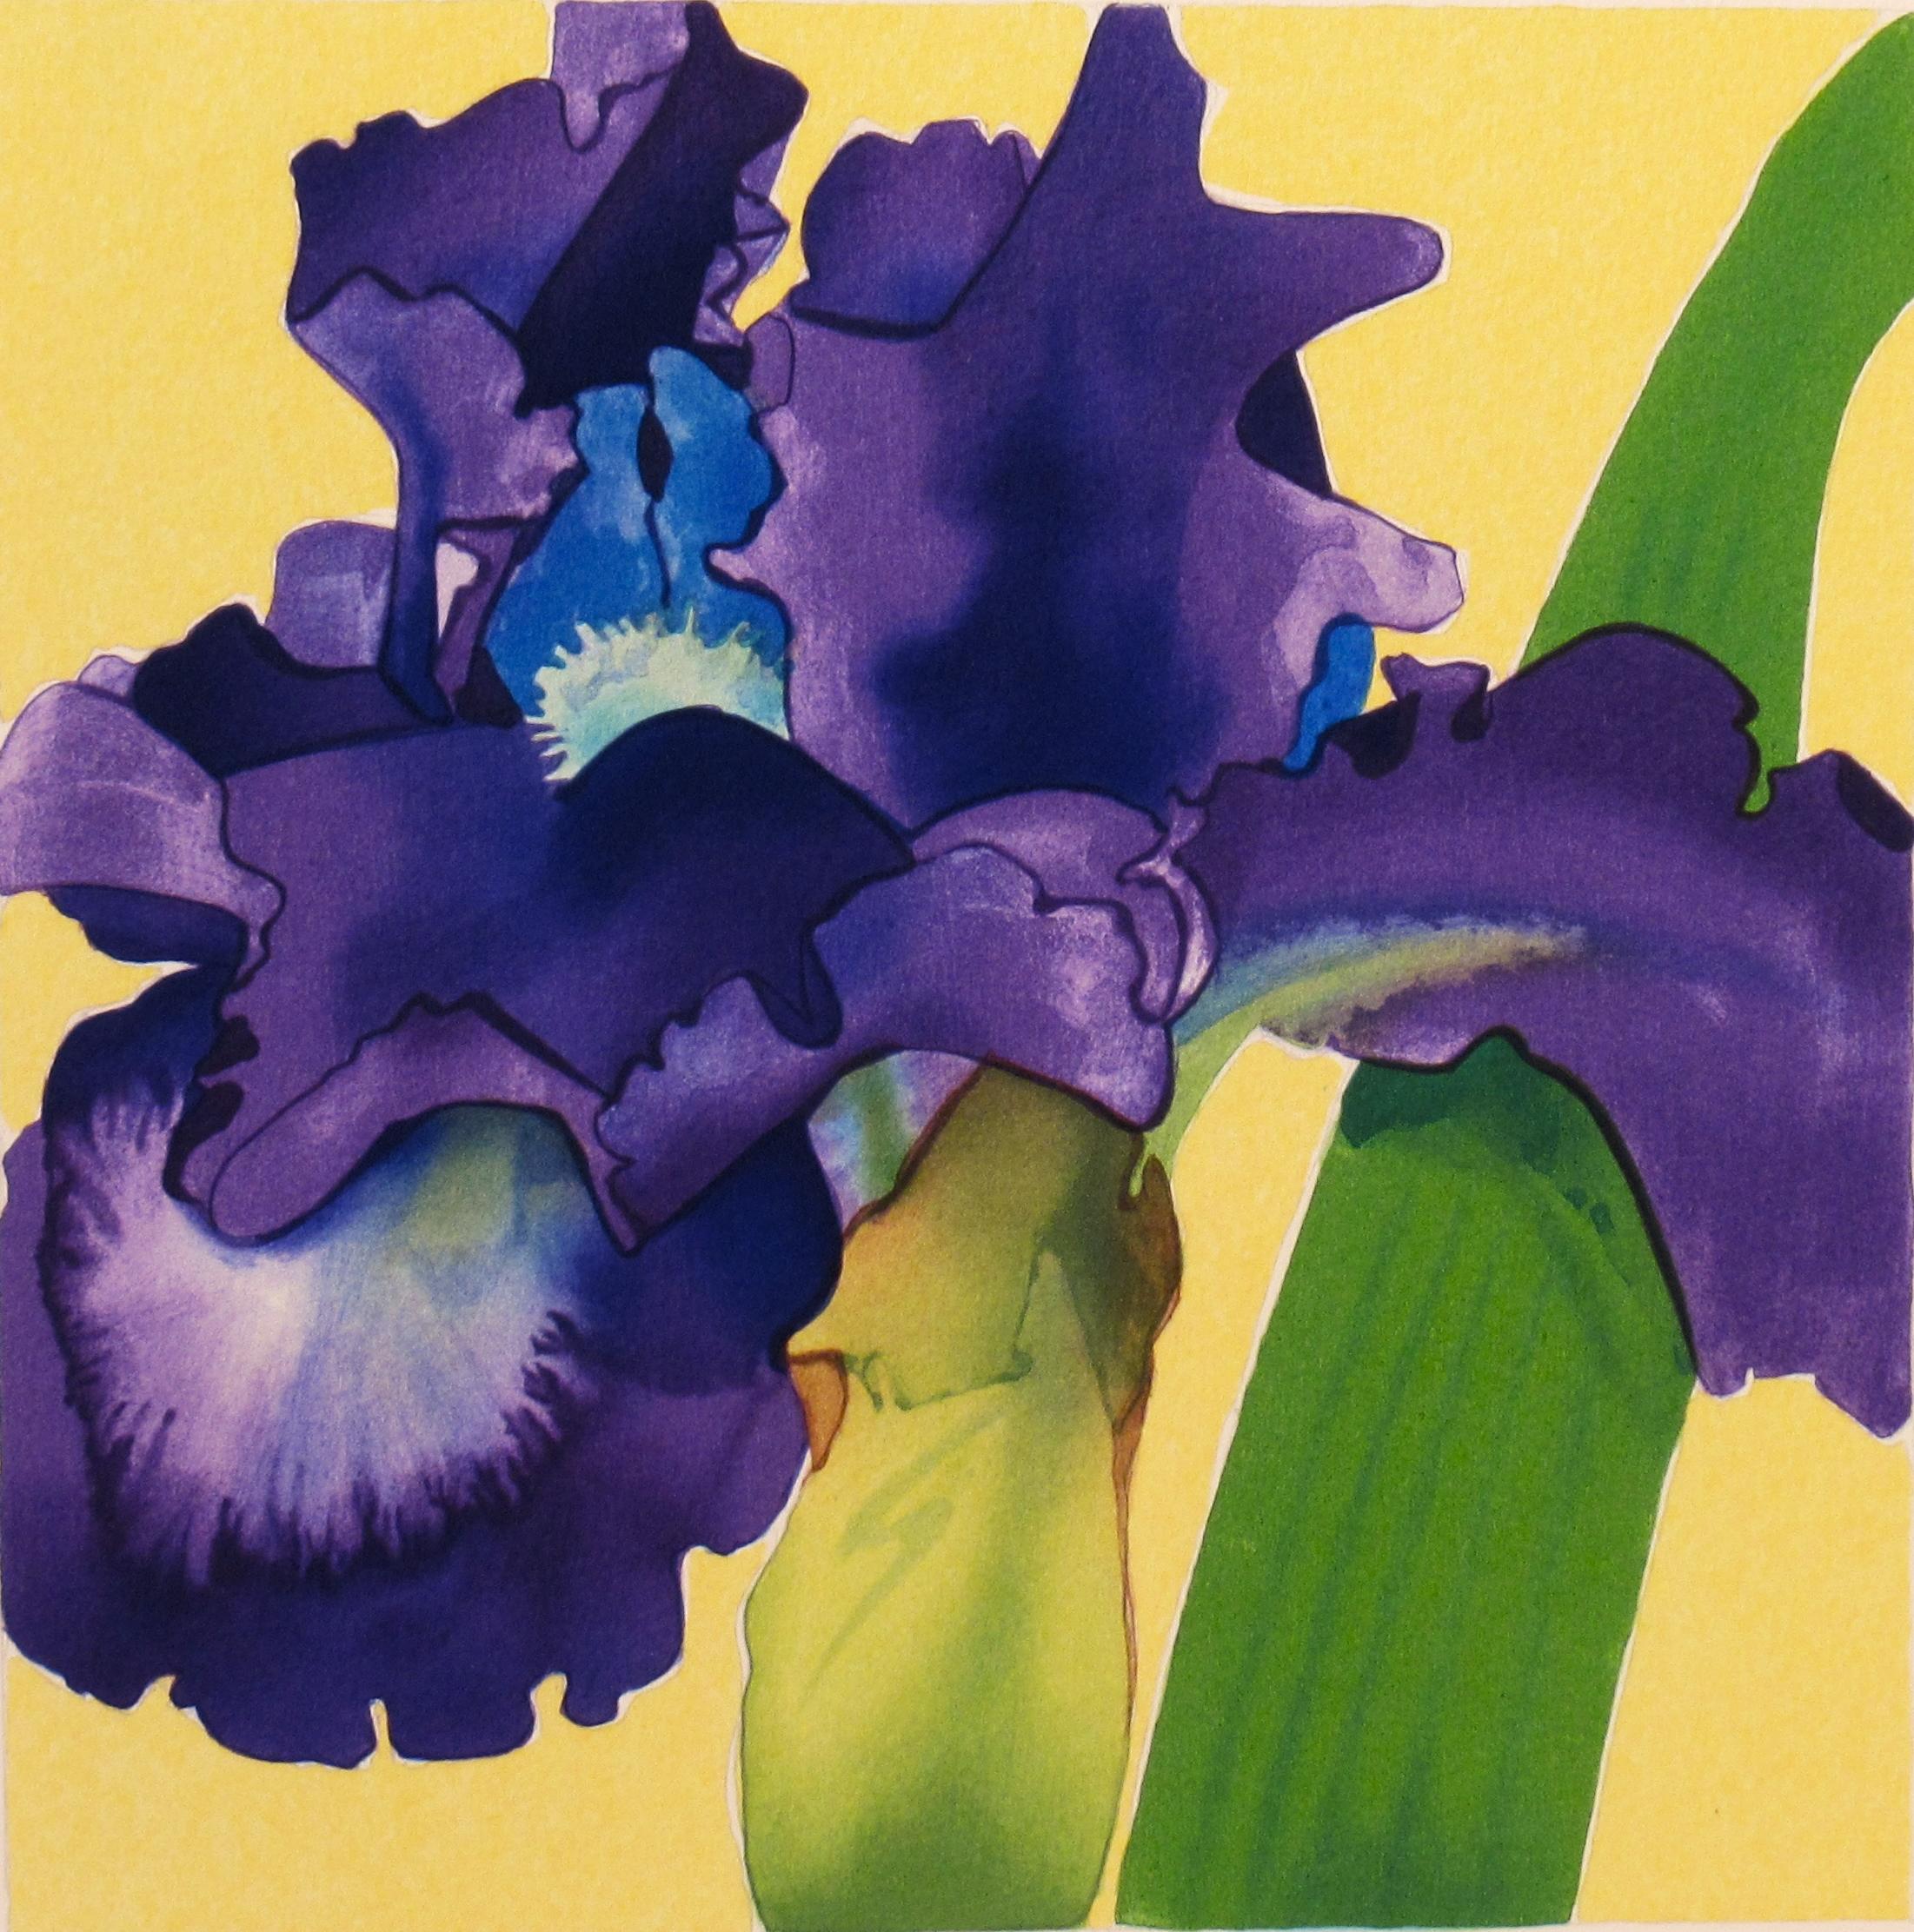 Iris - Print by Gary Bukovnik